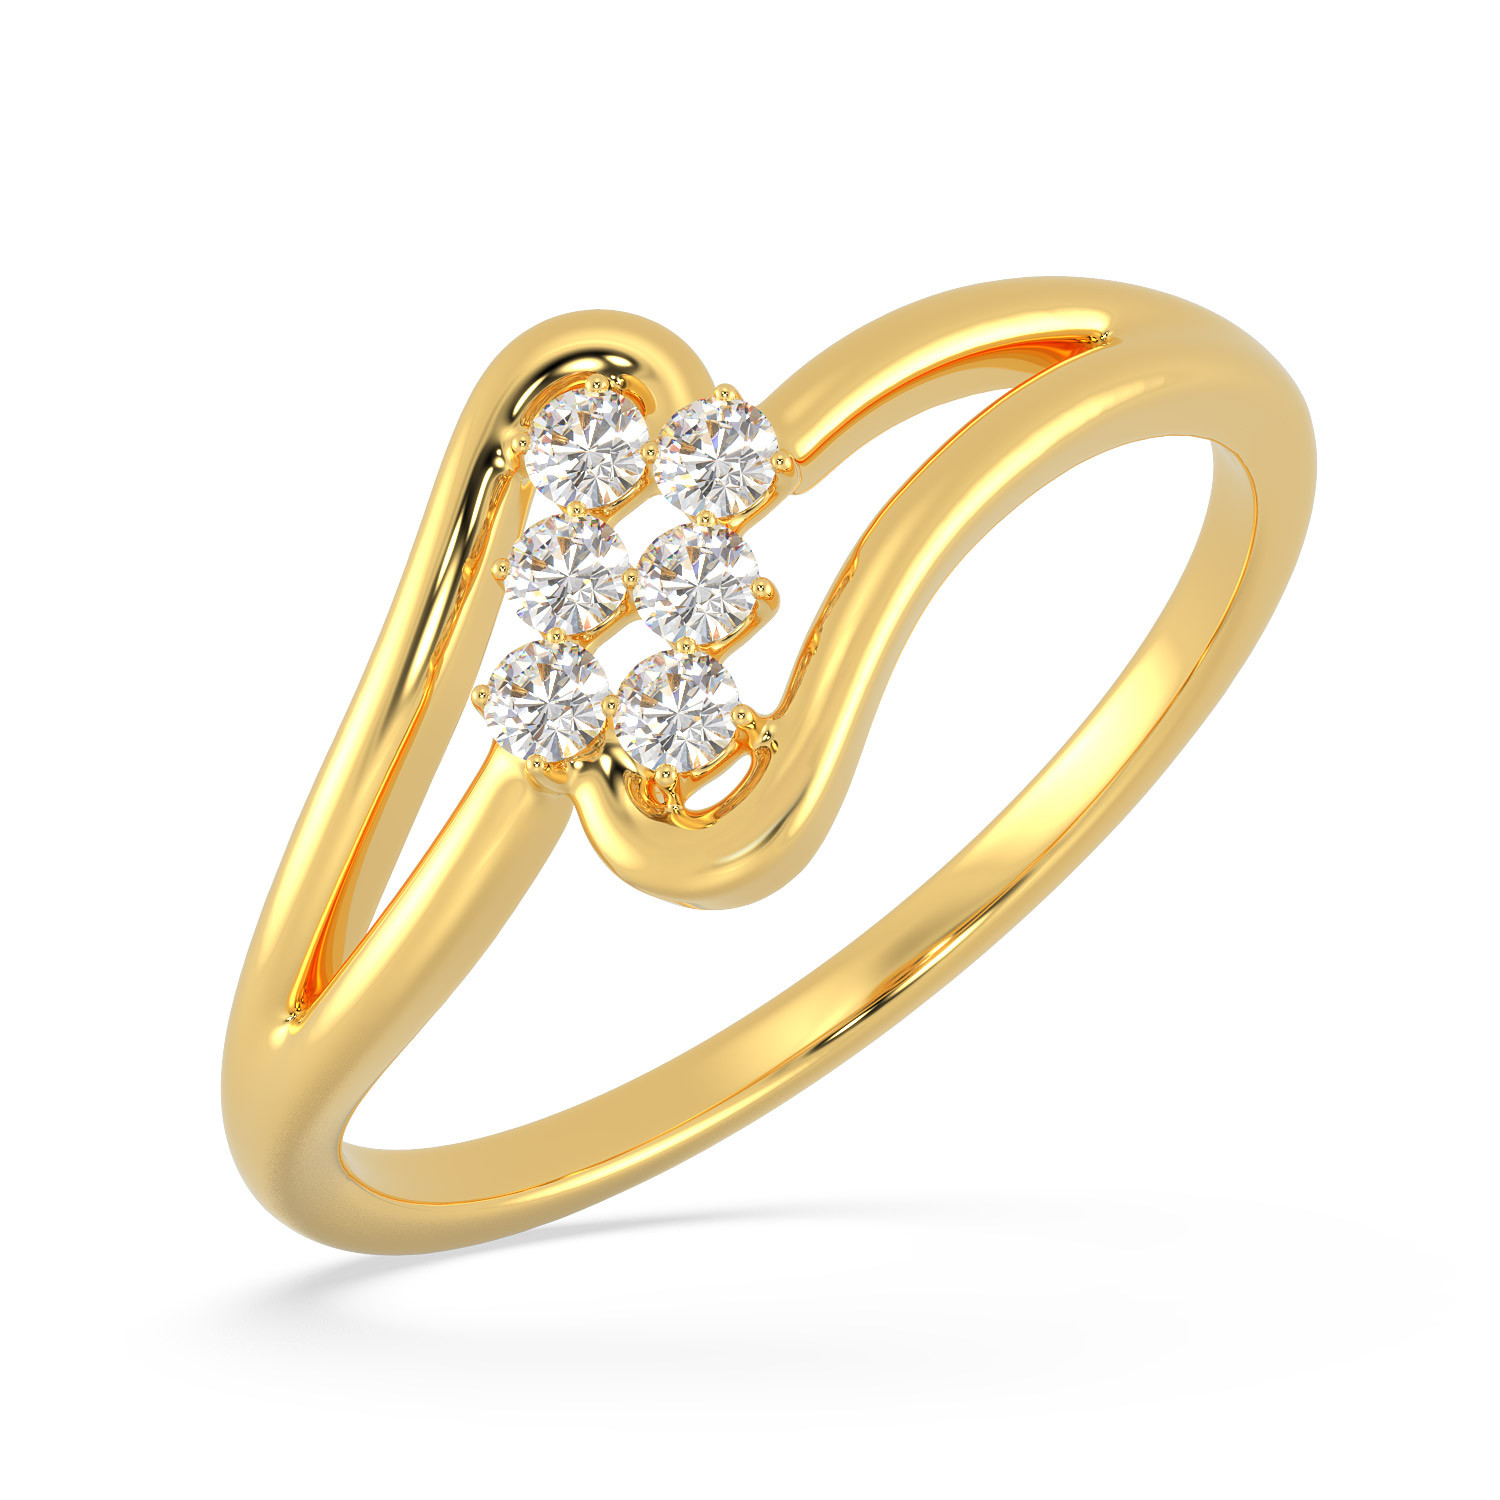 Malabar 22 KT Gold Studded Casual Ring SKYFRDZ083